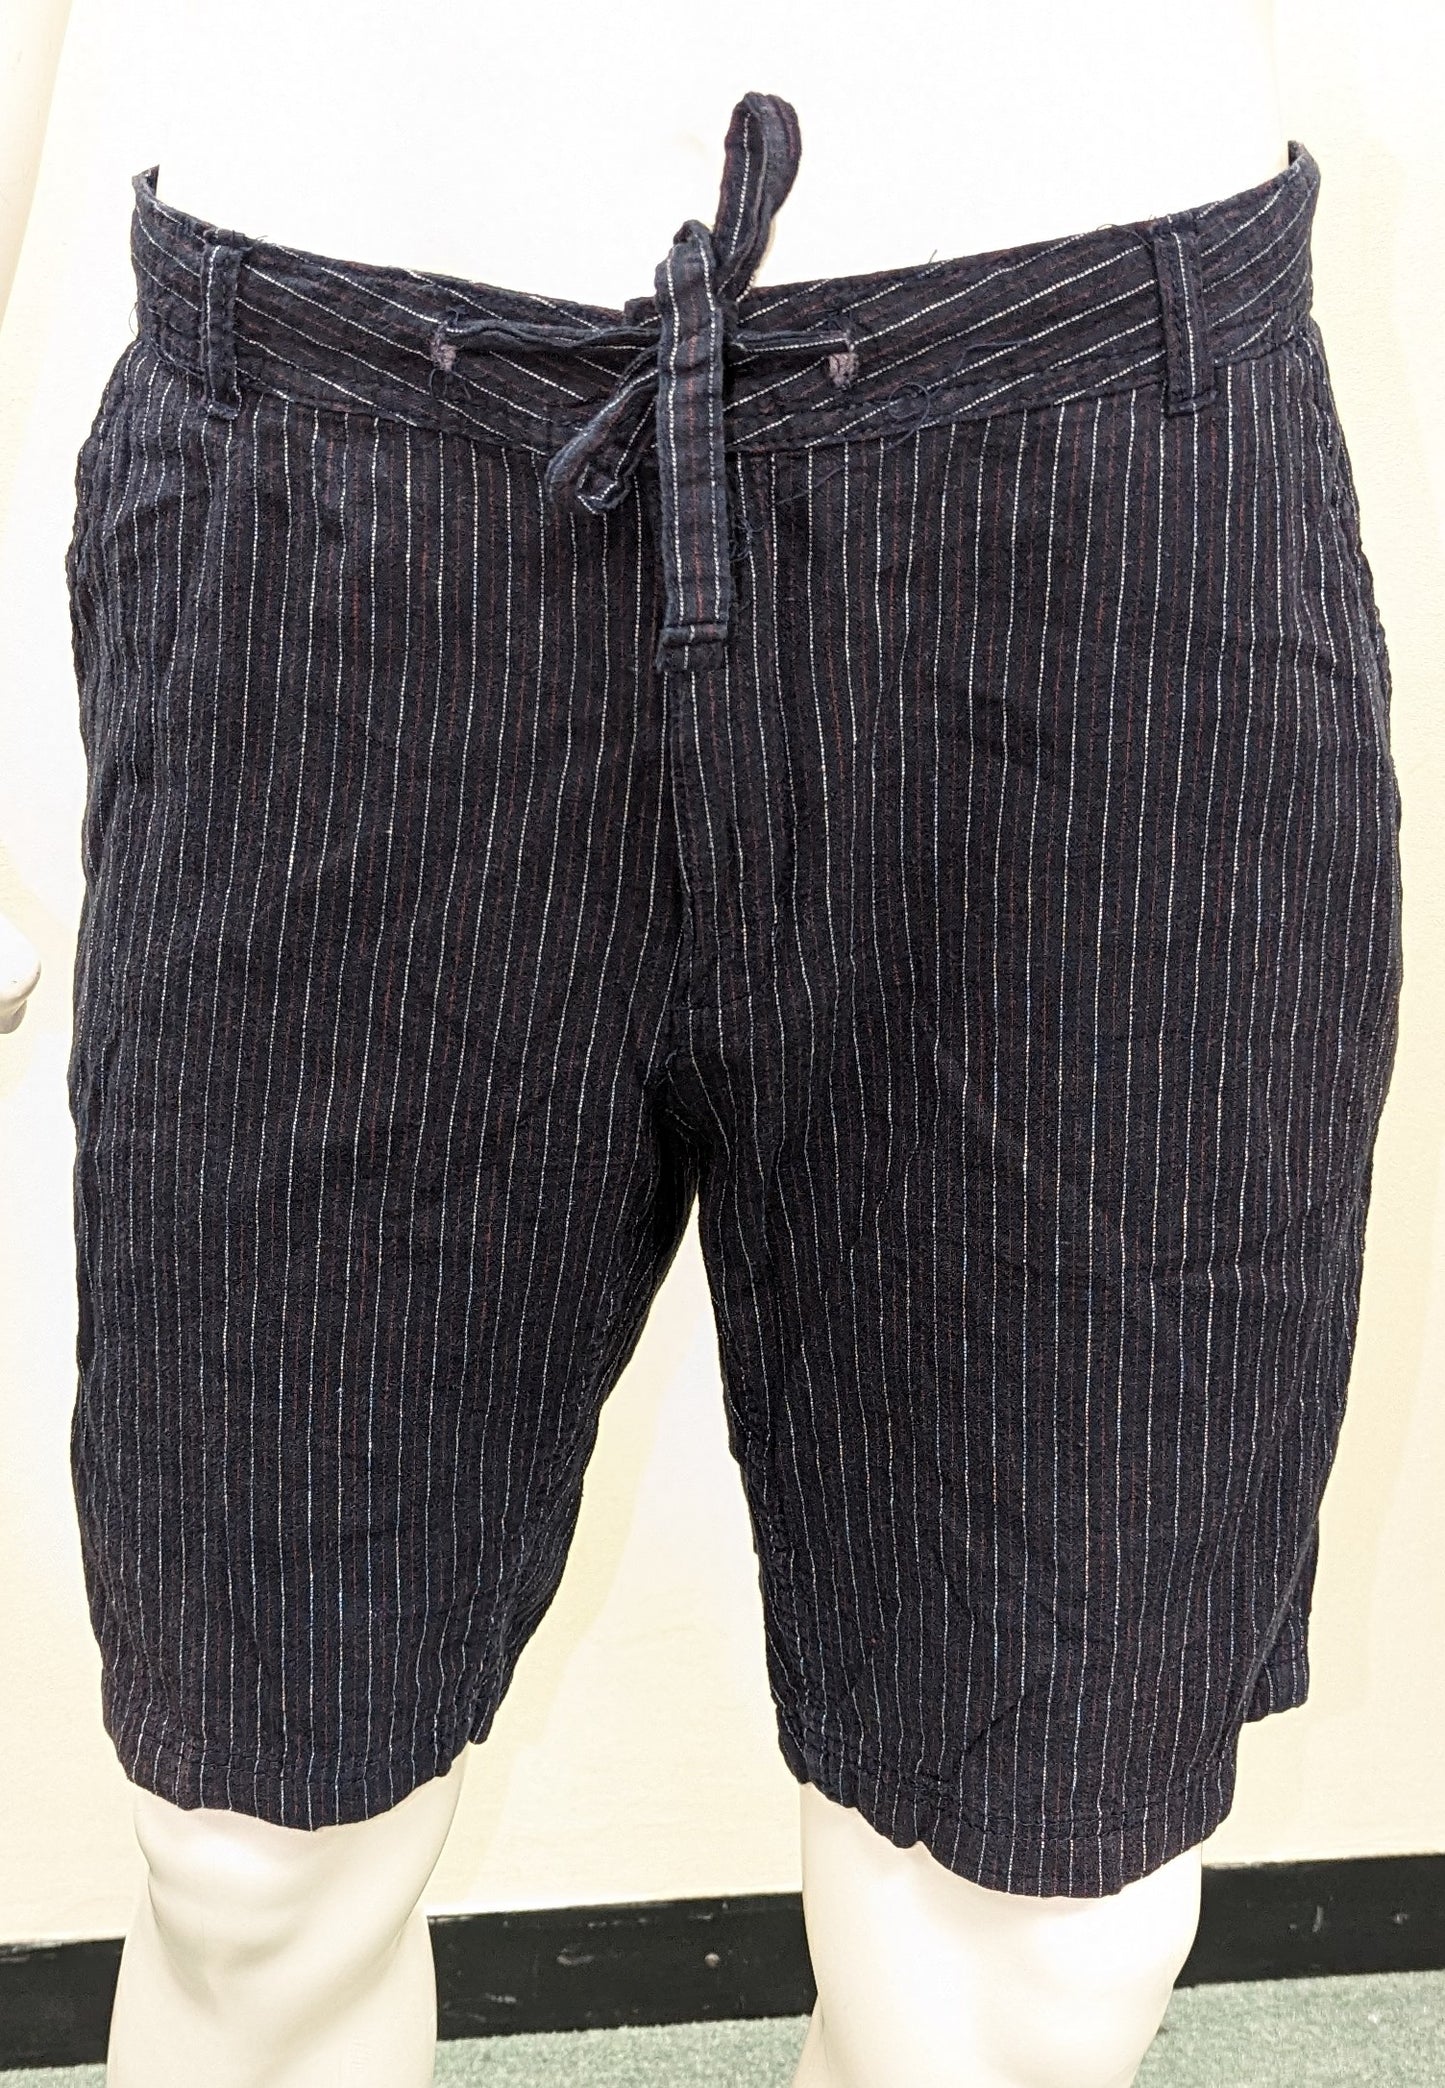 Men's Livergy Shorts - Size 28